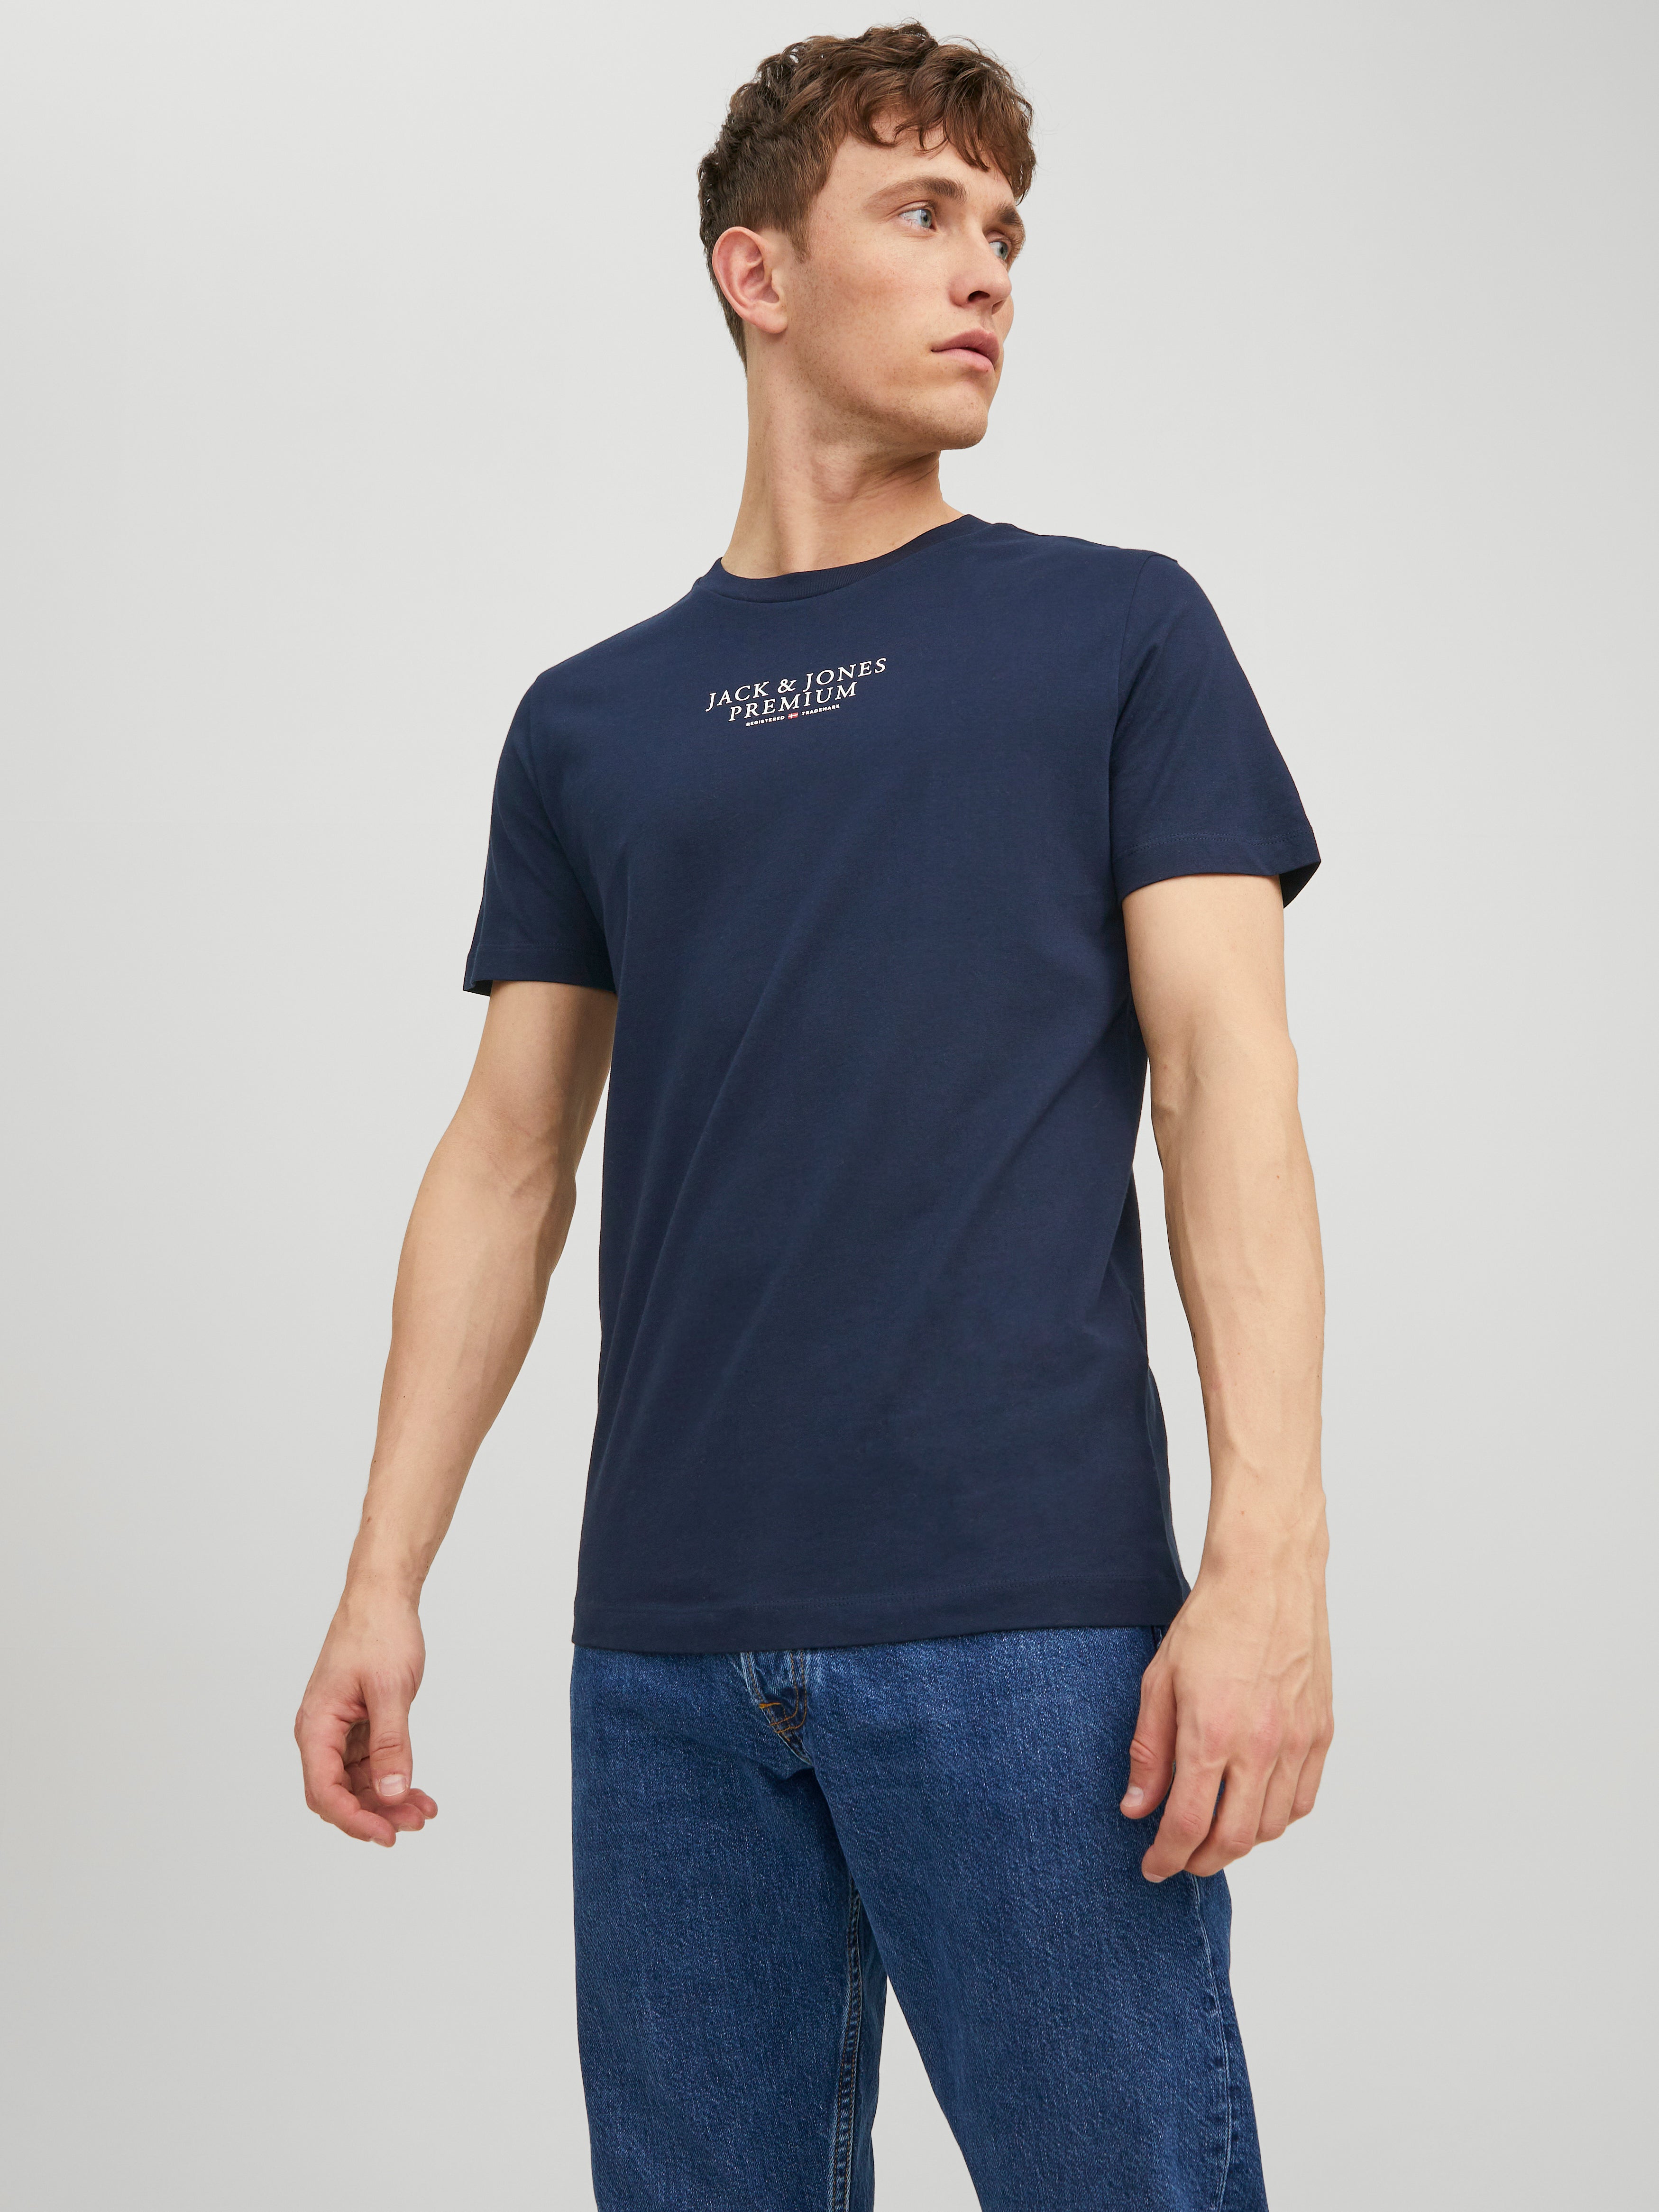 Kleding Herenkleding Overhemden & T-shirts T-shirts T-shirts met print Native Buffalo Bomber Jacket Premium Recycled 